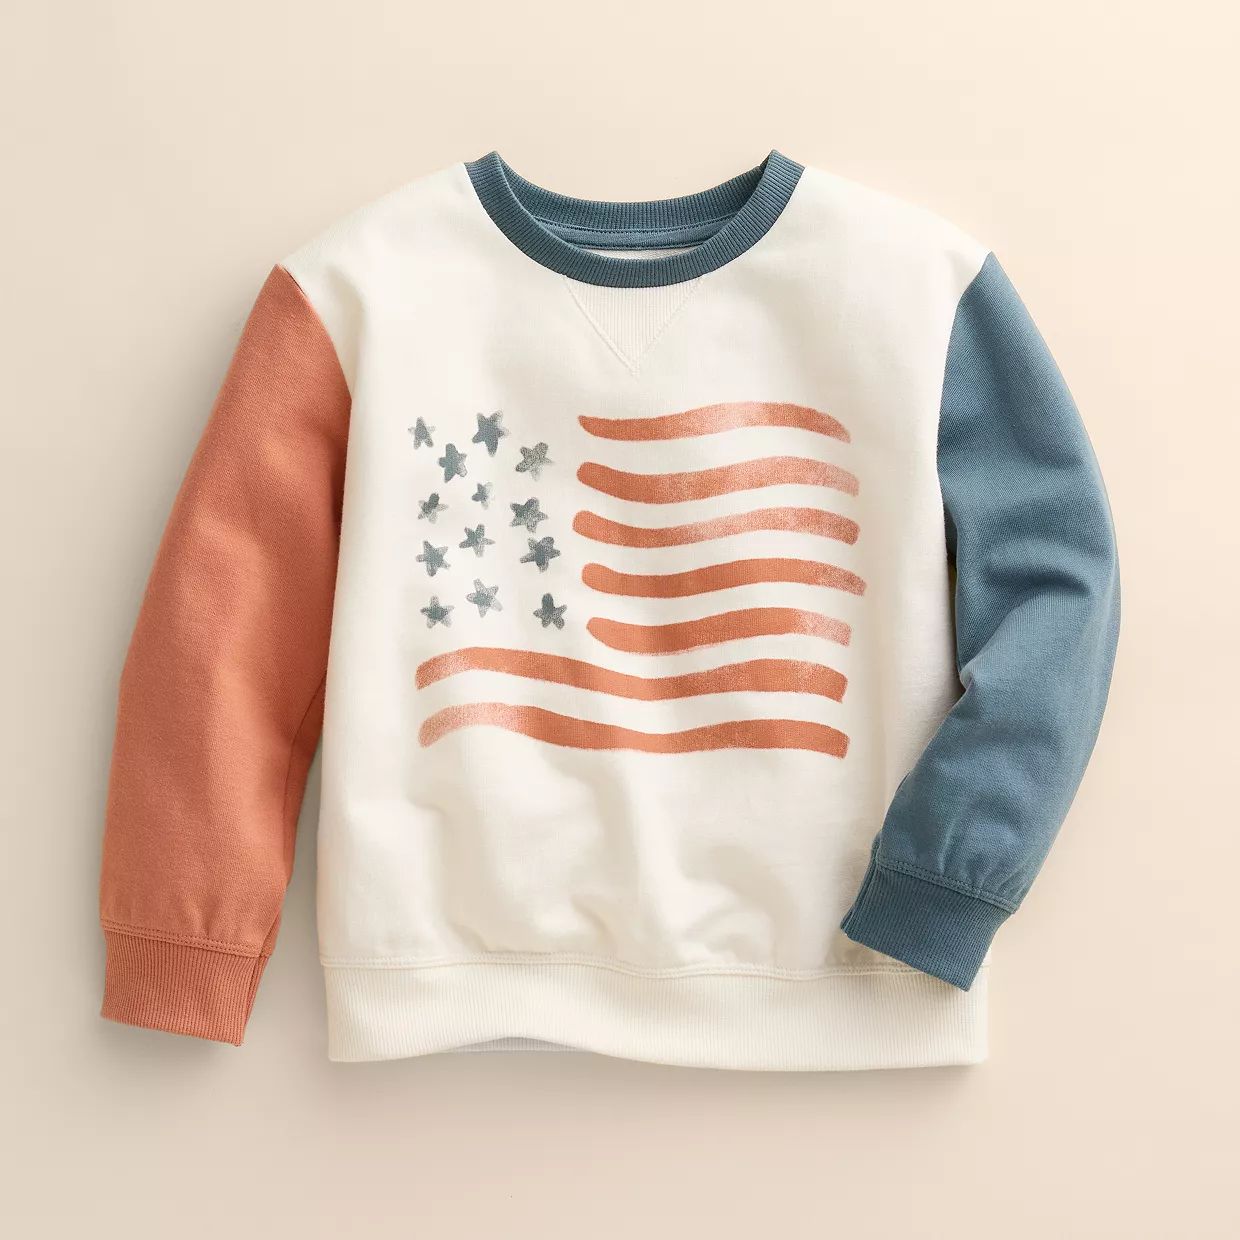 Baby & Toddler Little Co. by Lauren Conrad Organic Sweatshirt | Kohl's